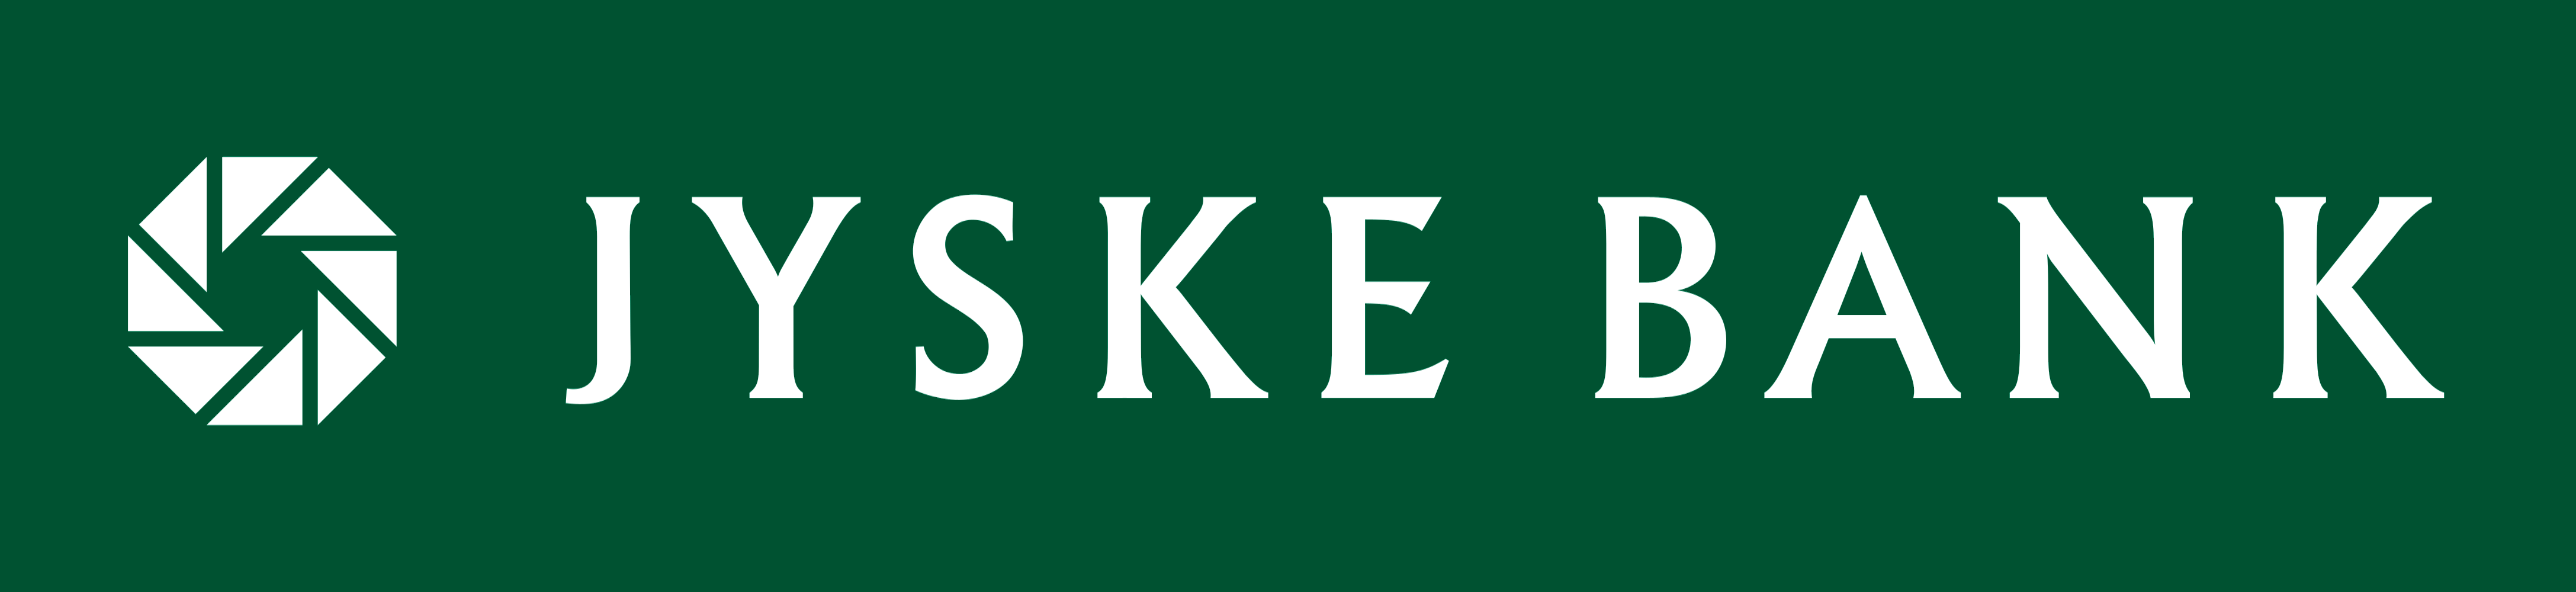 Jyske Bank logo, logotype